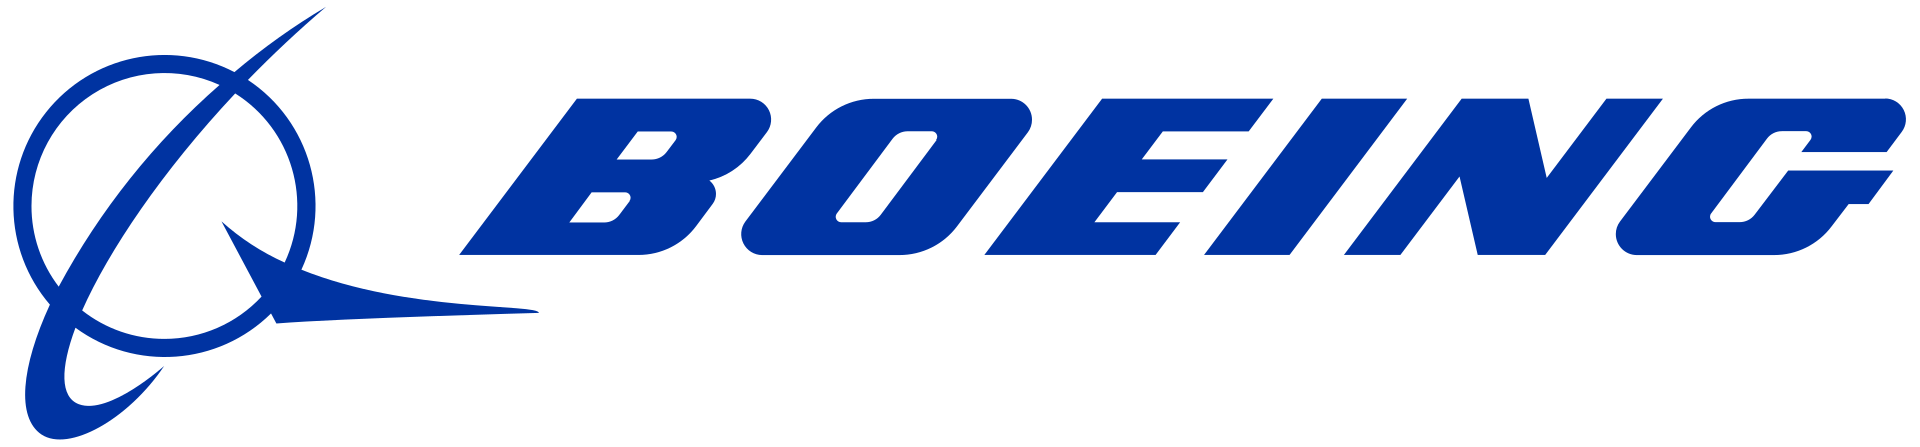 1920px-Boeing_full_logo.svg.png